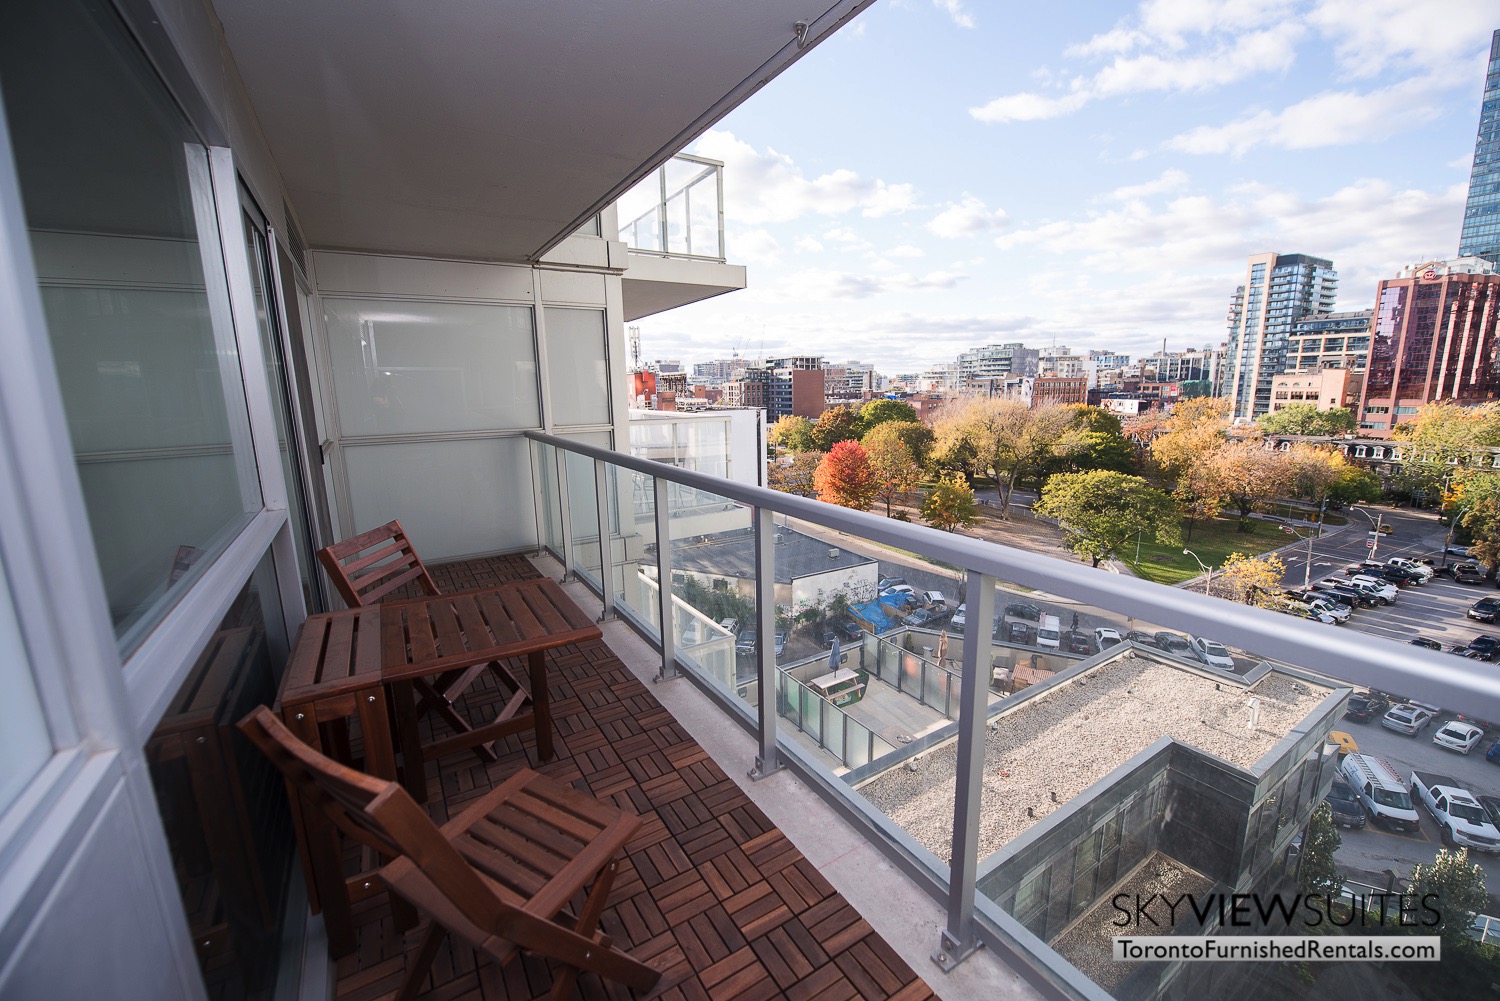 352 Front St. W., Toronto furnished rental balcony view